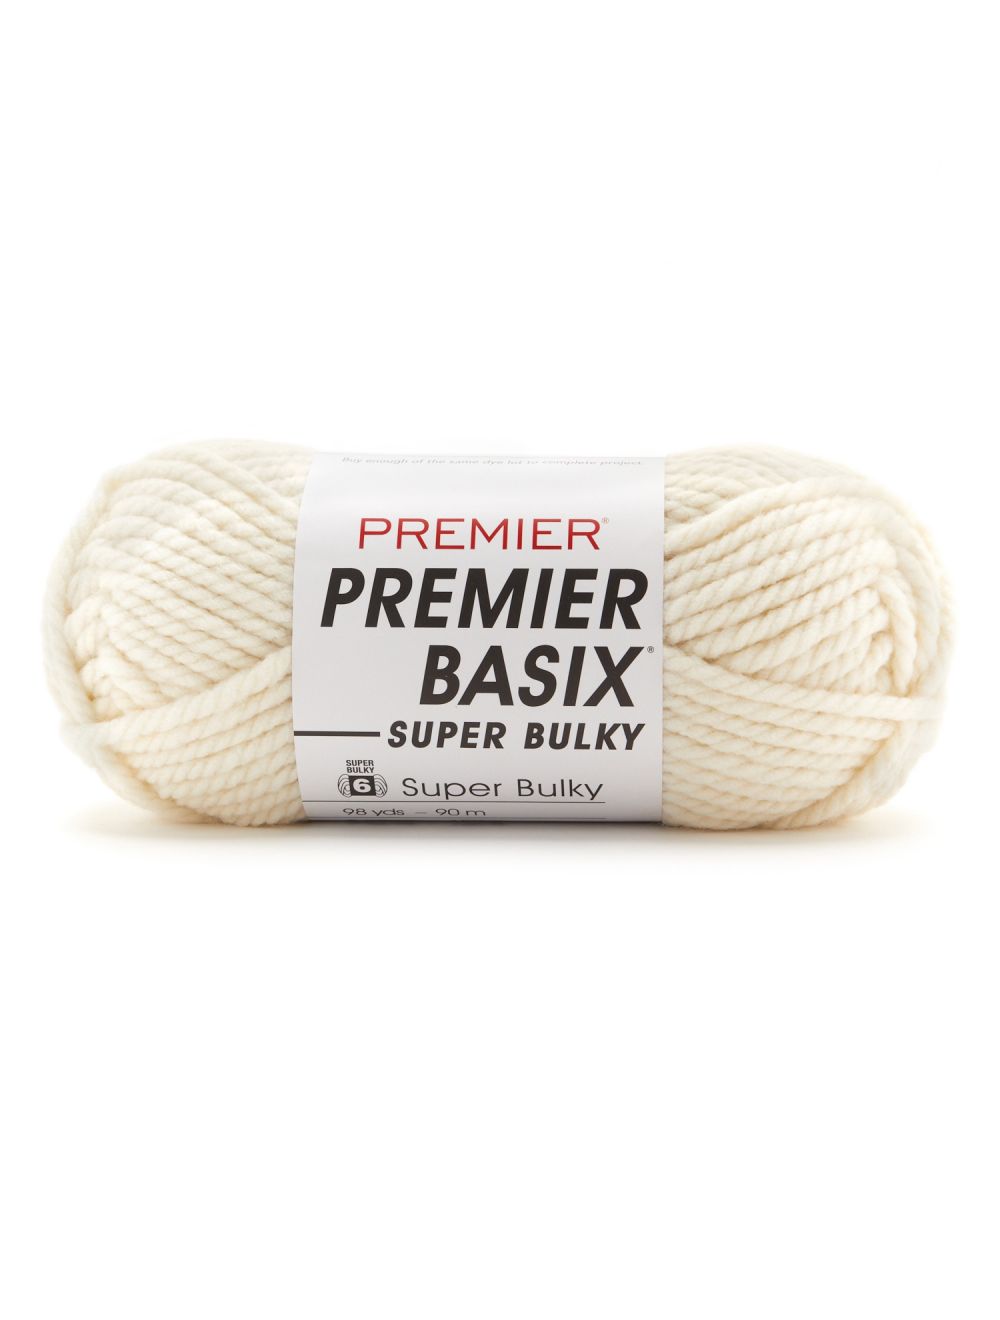 Premier Basix Super Bulky Yarn *New* | Crossed Hearts Needlework & Design Aran - Premier Basix Super Bulky Yarn *New*